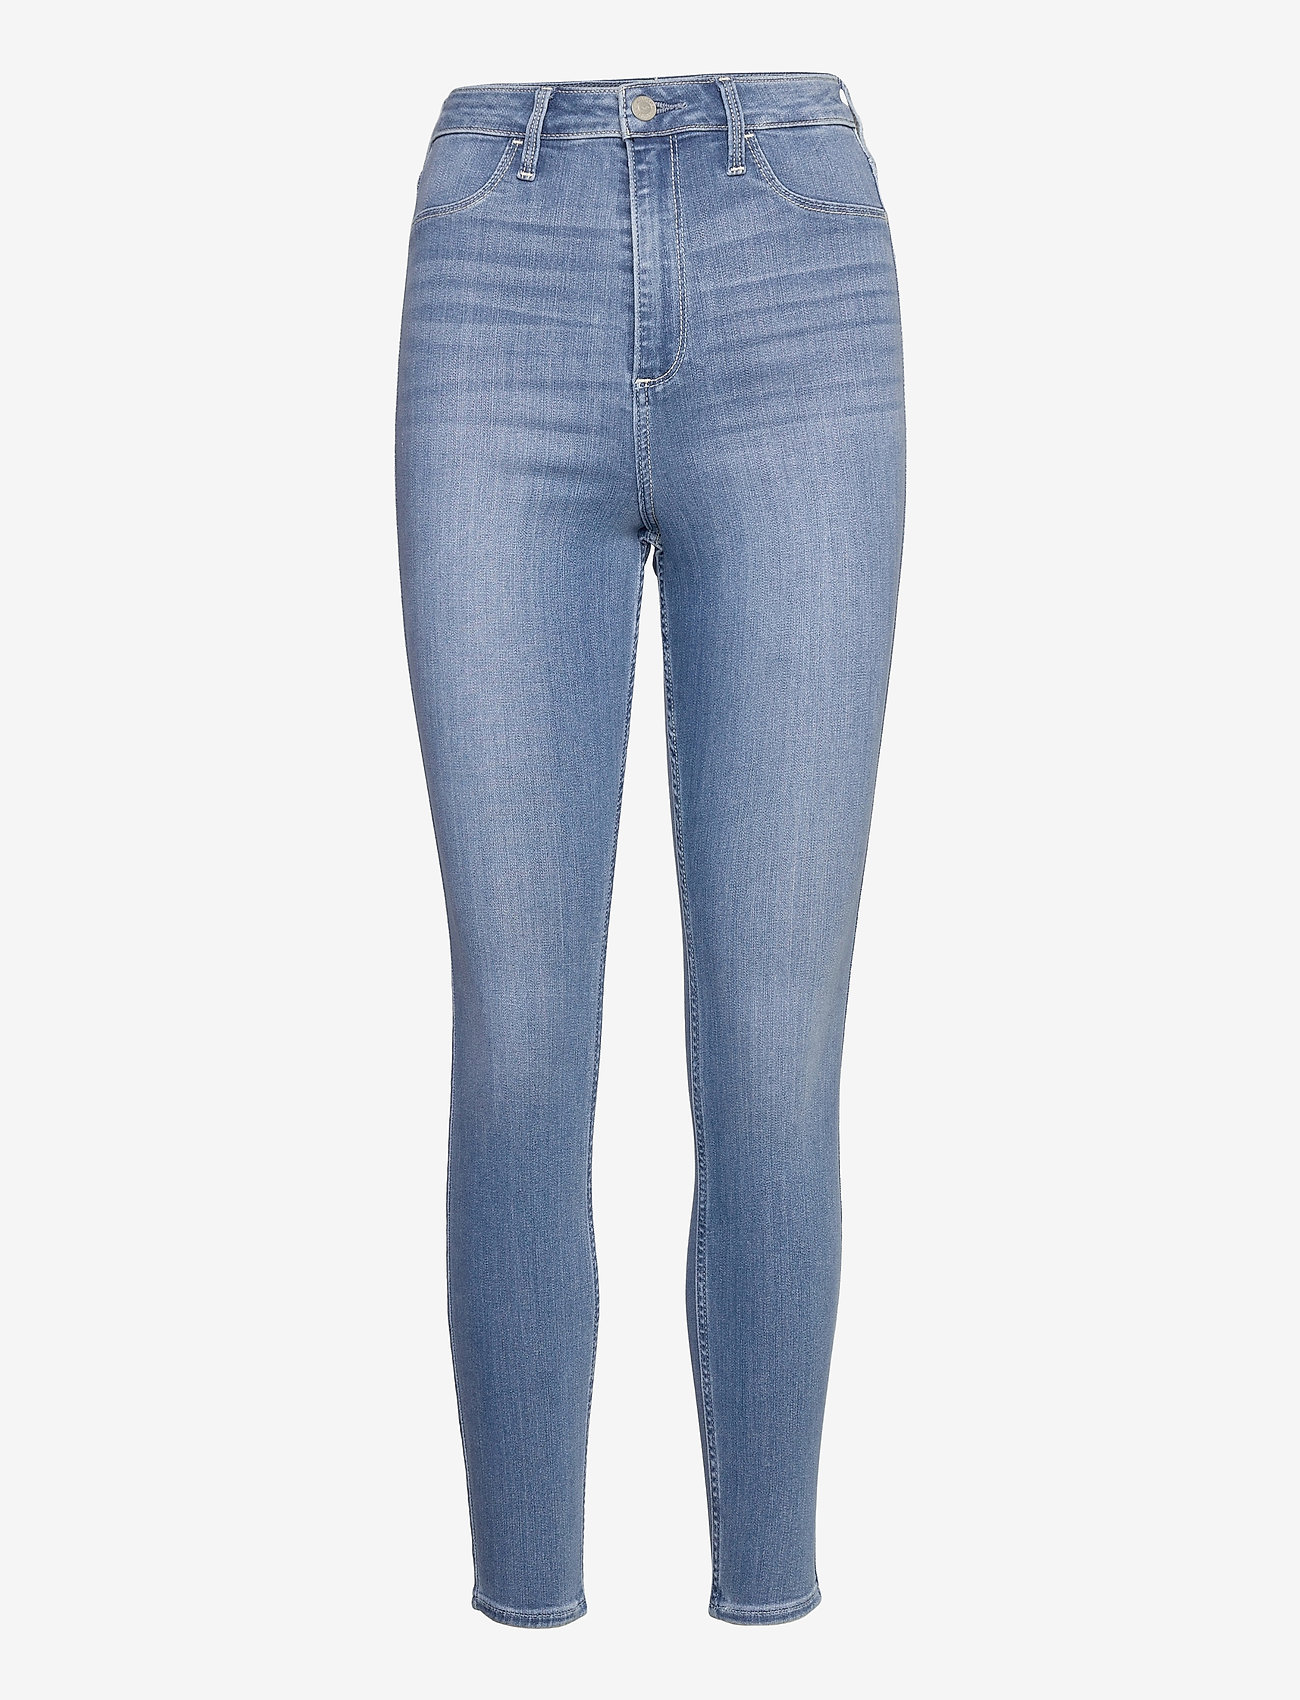 Hco. Girls Jeans (Medium Clean) (41.25 